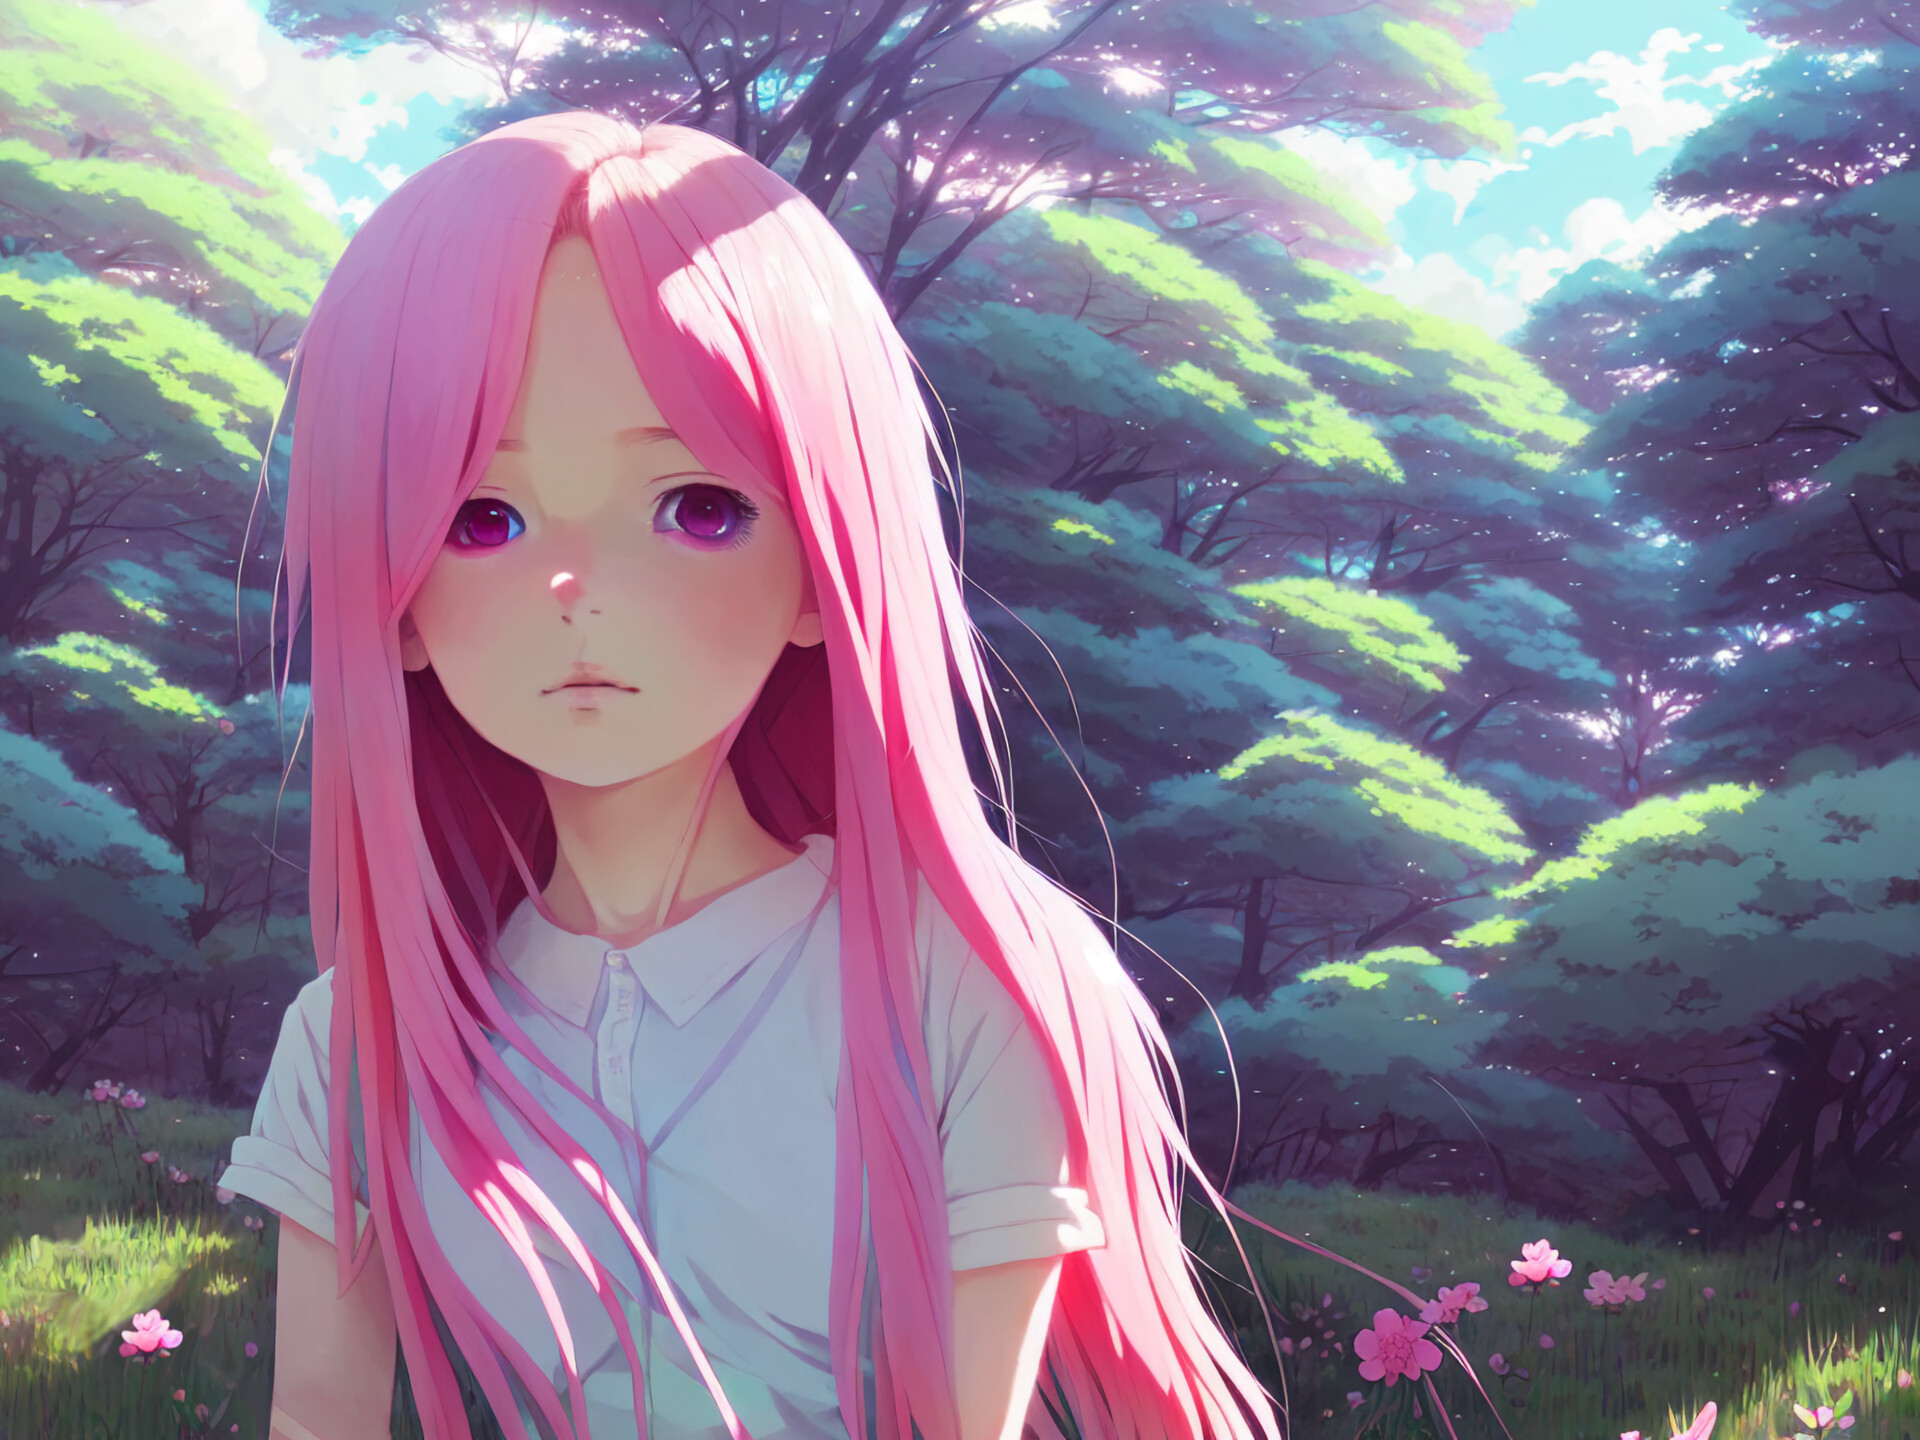 Anime Girl With Short Black Hair–The Top 10 | Otaku Fanatic